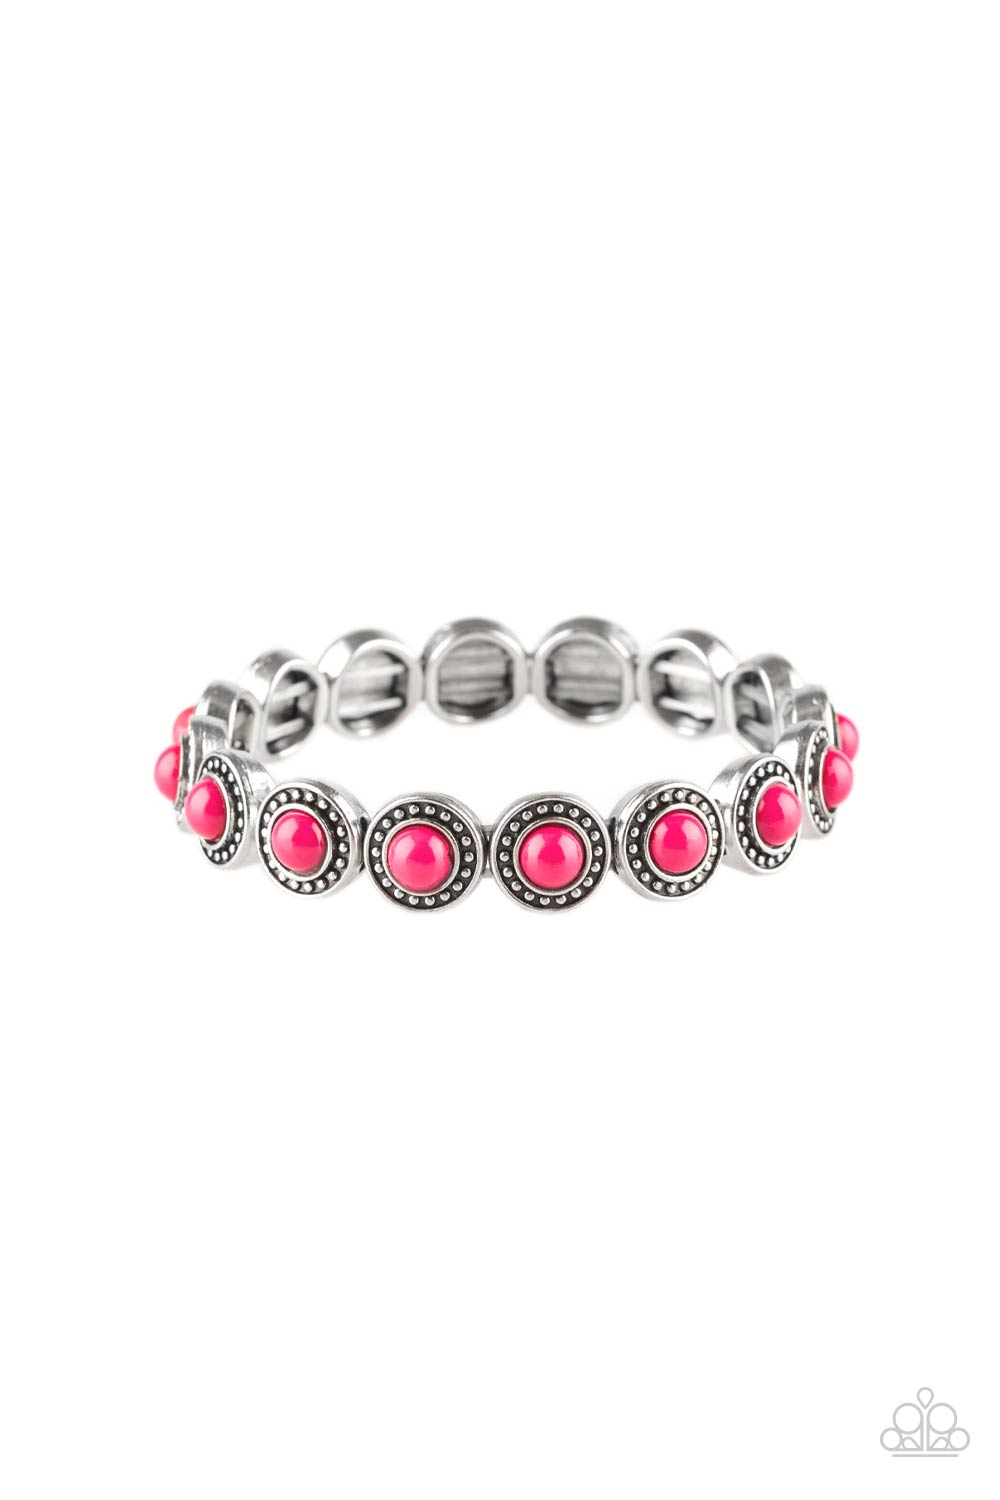 Globetrotter Goals - Pink Paparazzi Bracelet